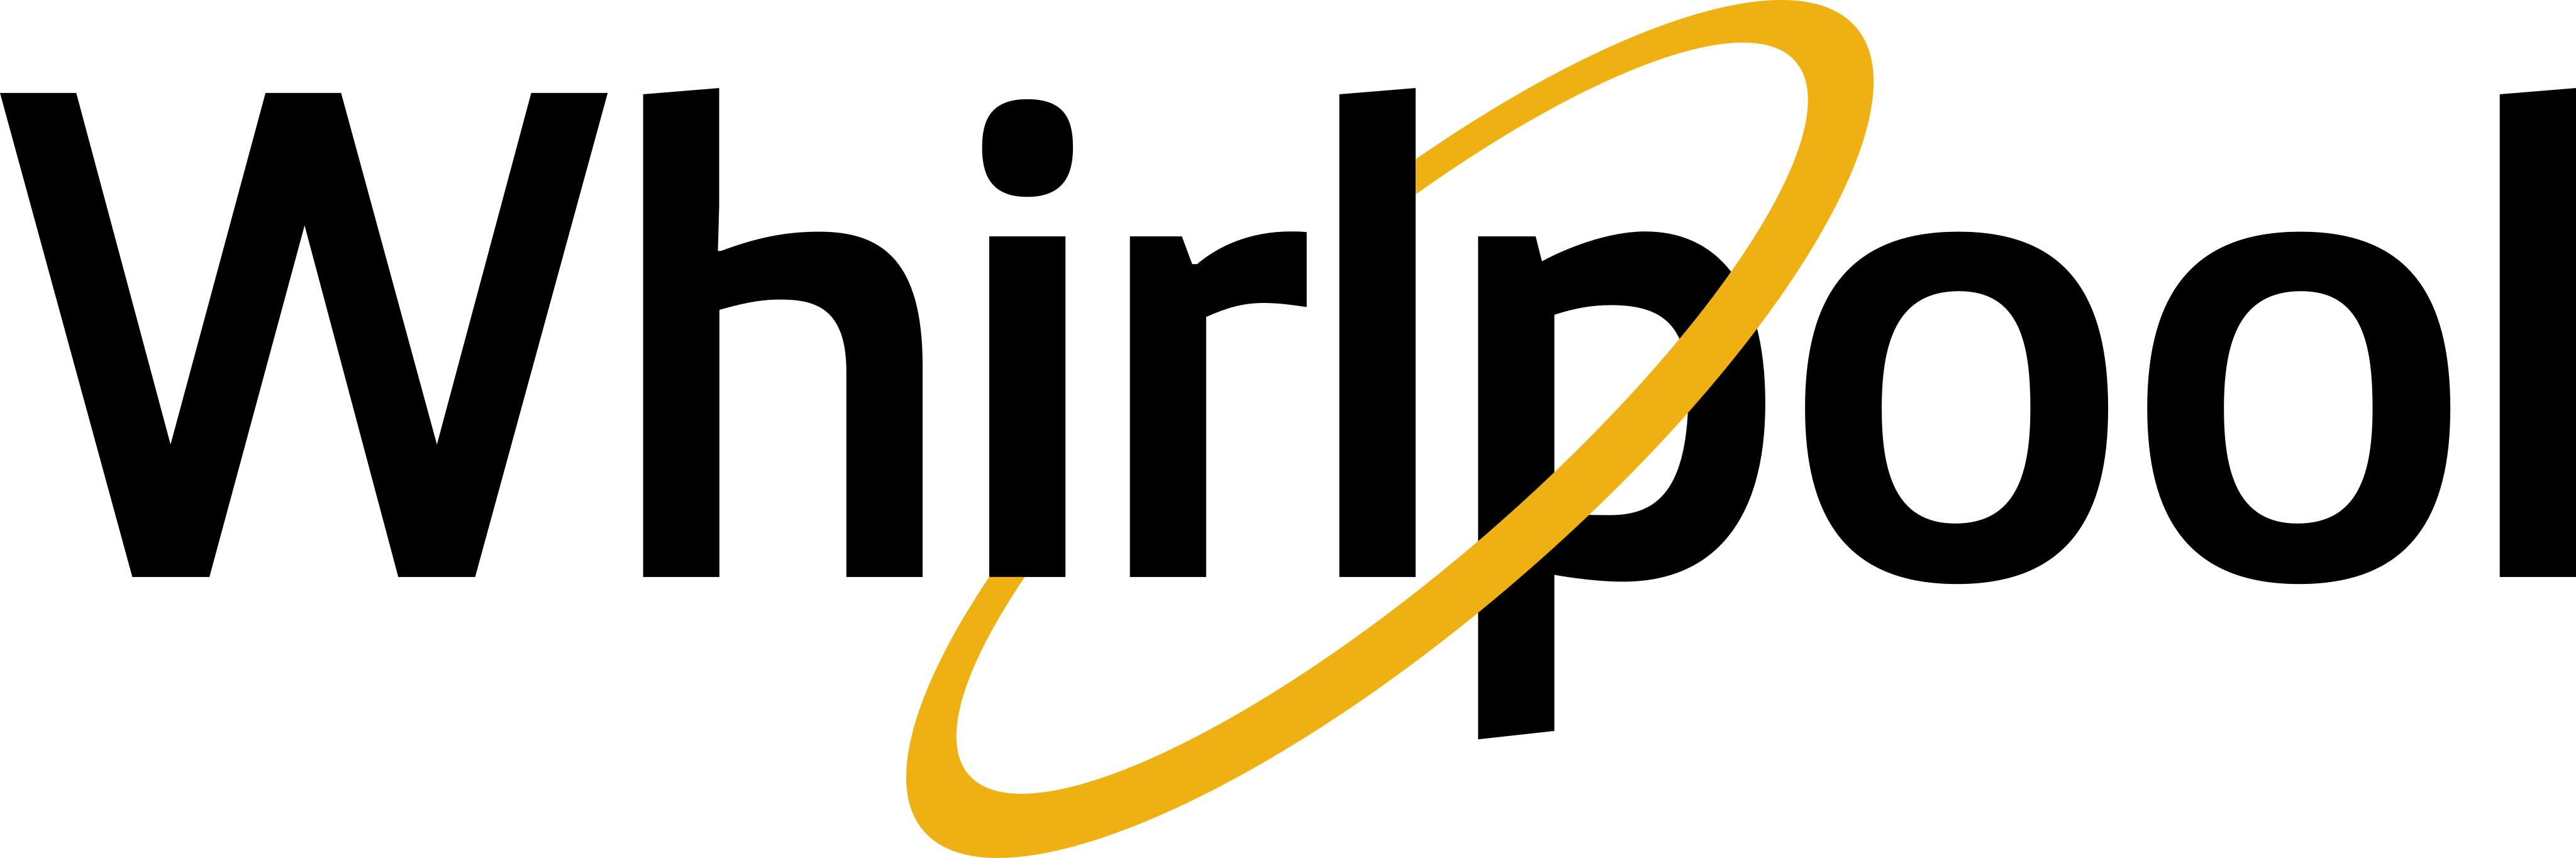 Whirlpool Logo.